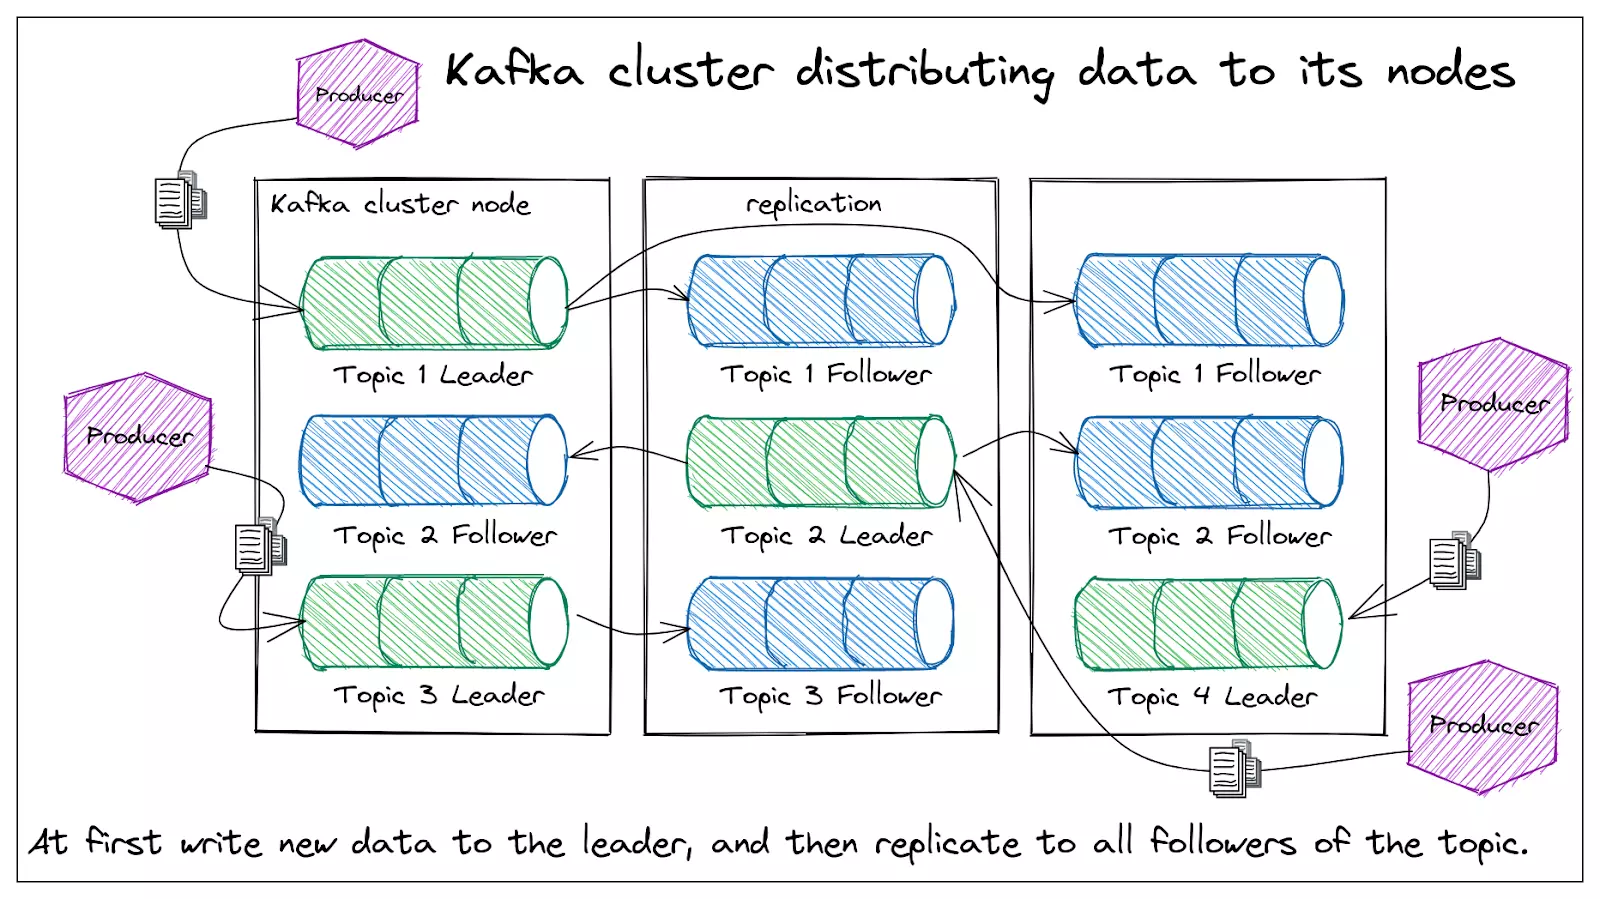 Kafka cluster distributing data to its nodes